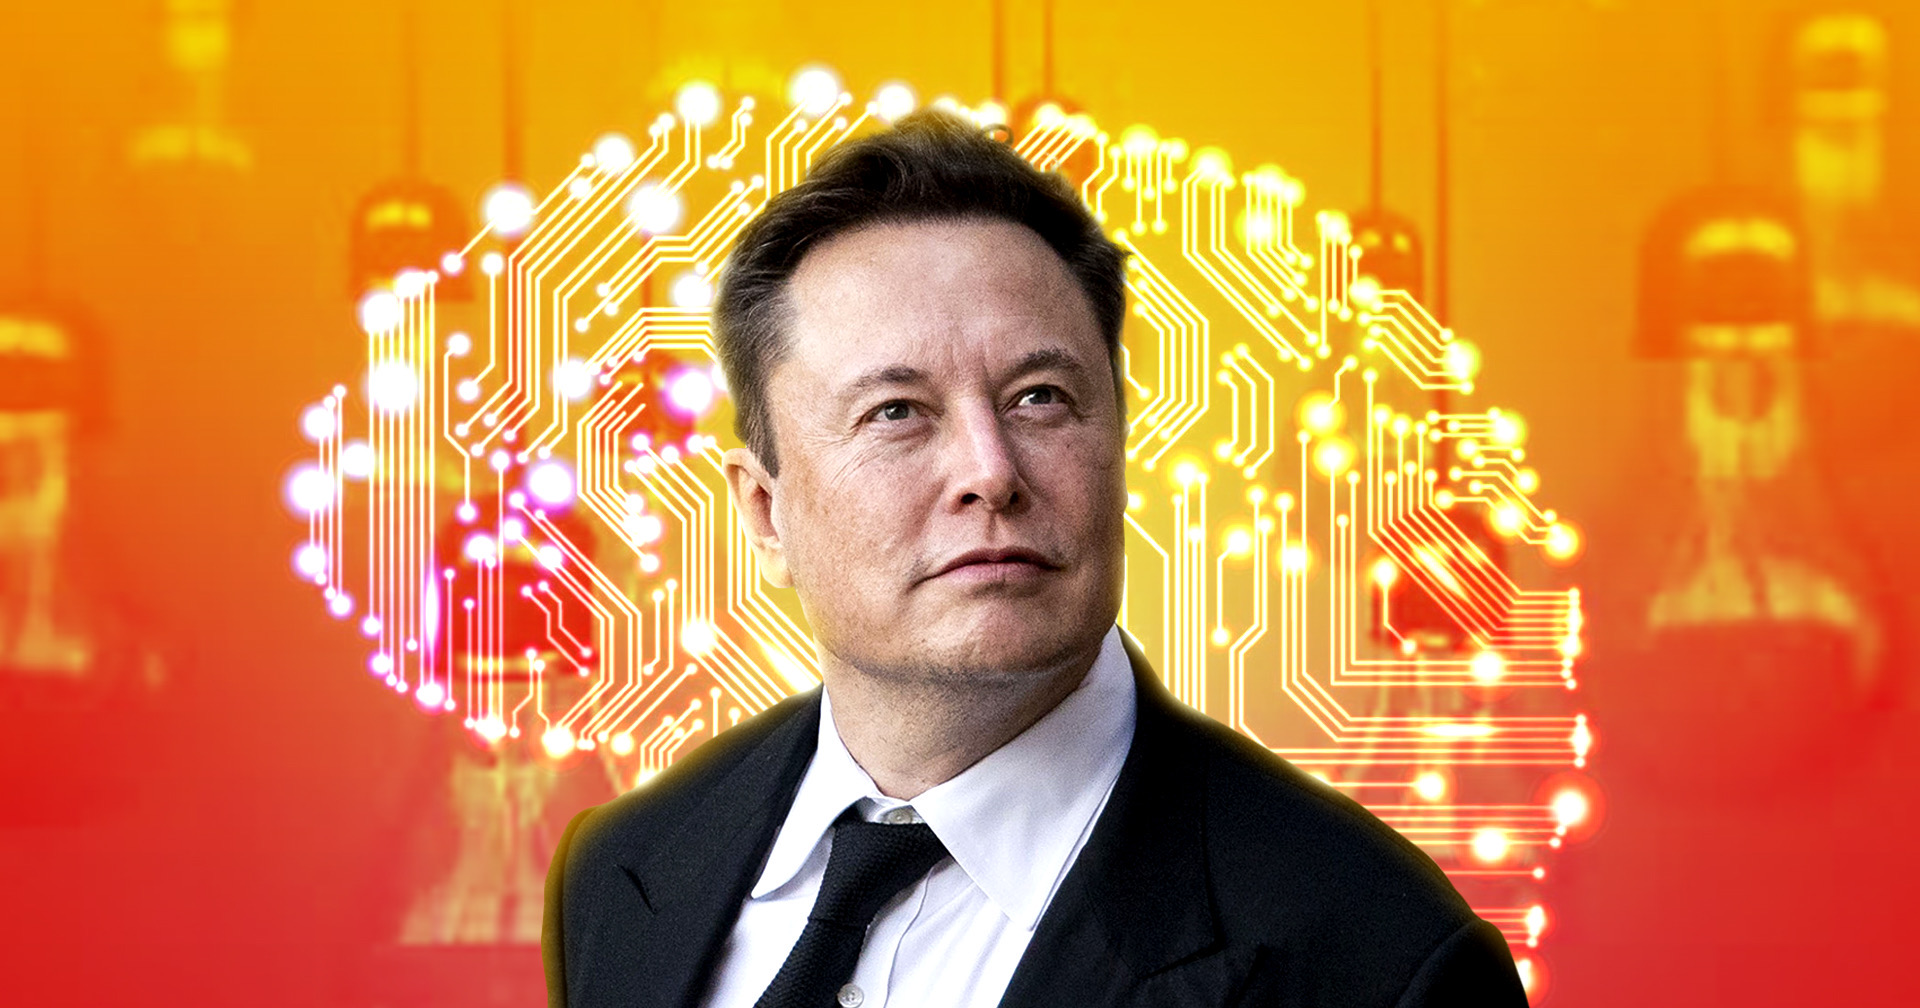 Elon Musk ไม่ชอบทำแผนธุรกิจ เพราะเขาคิดว่ามันมักจะ ‘พลาดและเปลี่ยนแปลงอยู่ตลอด’